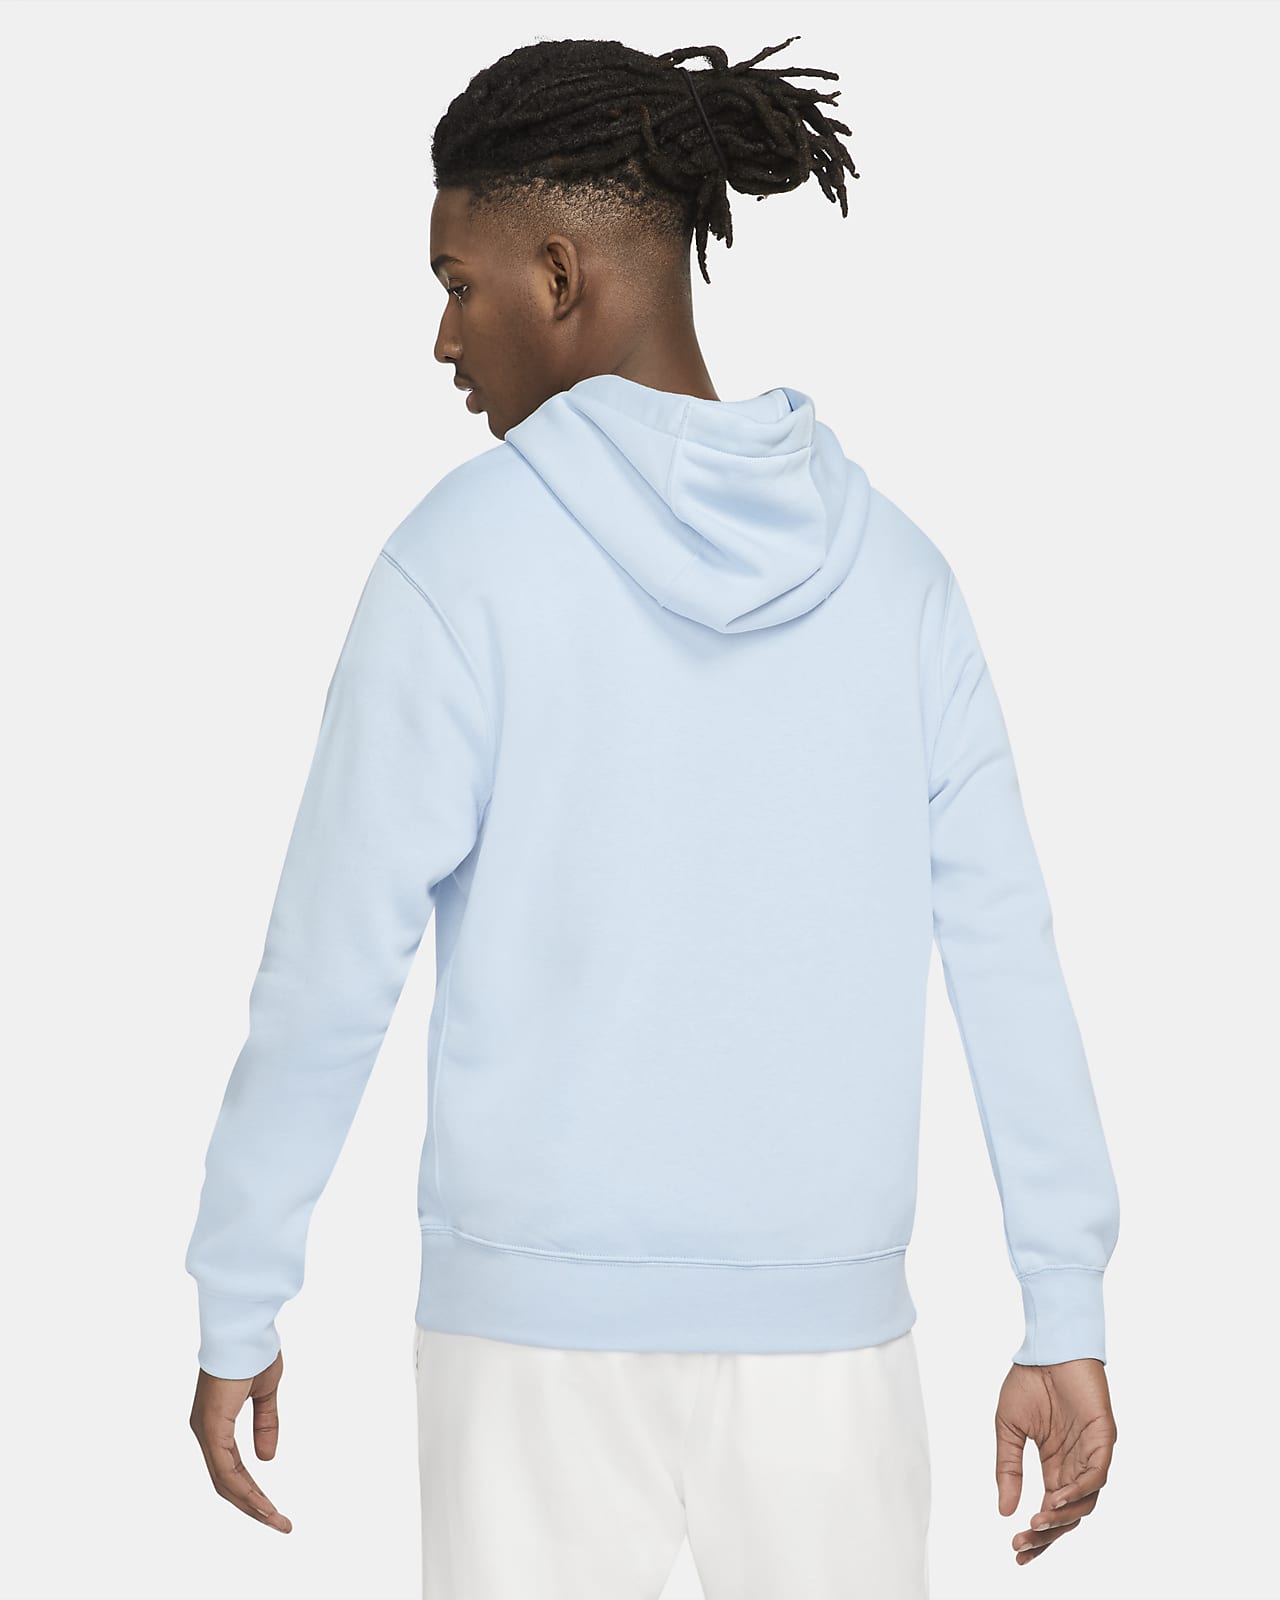 nike blue and white sweatshirt